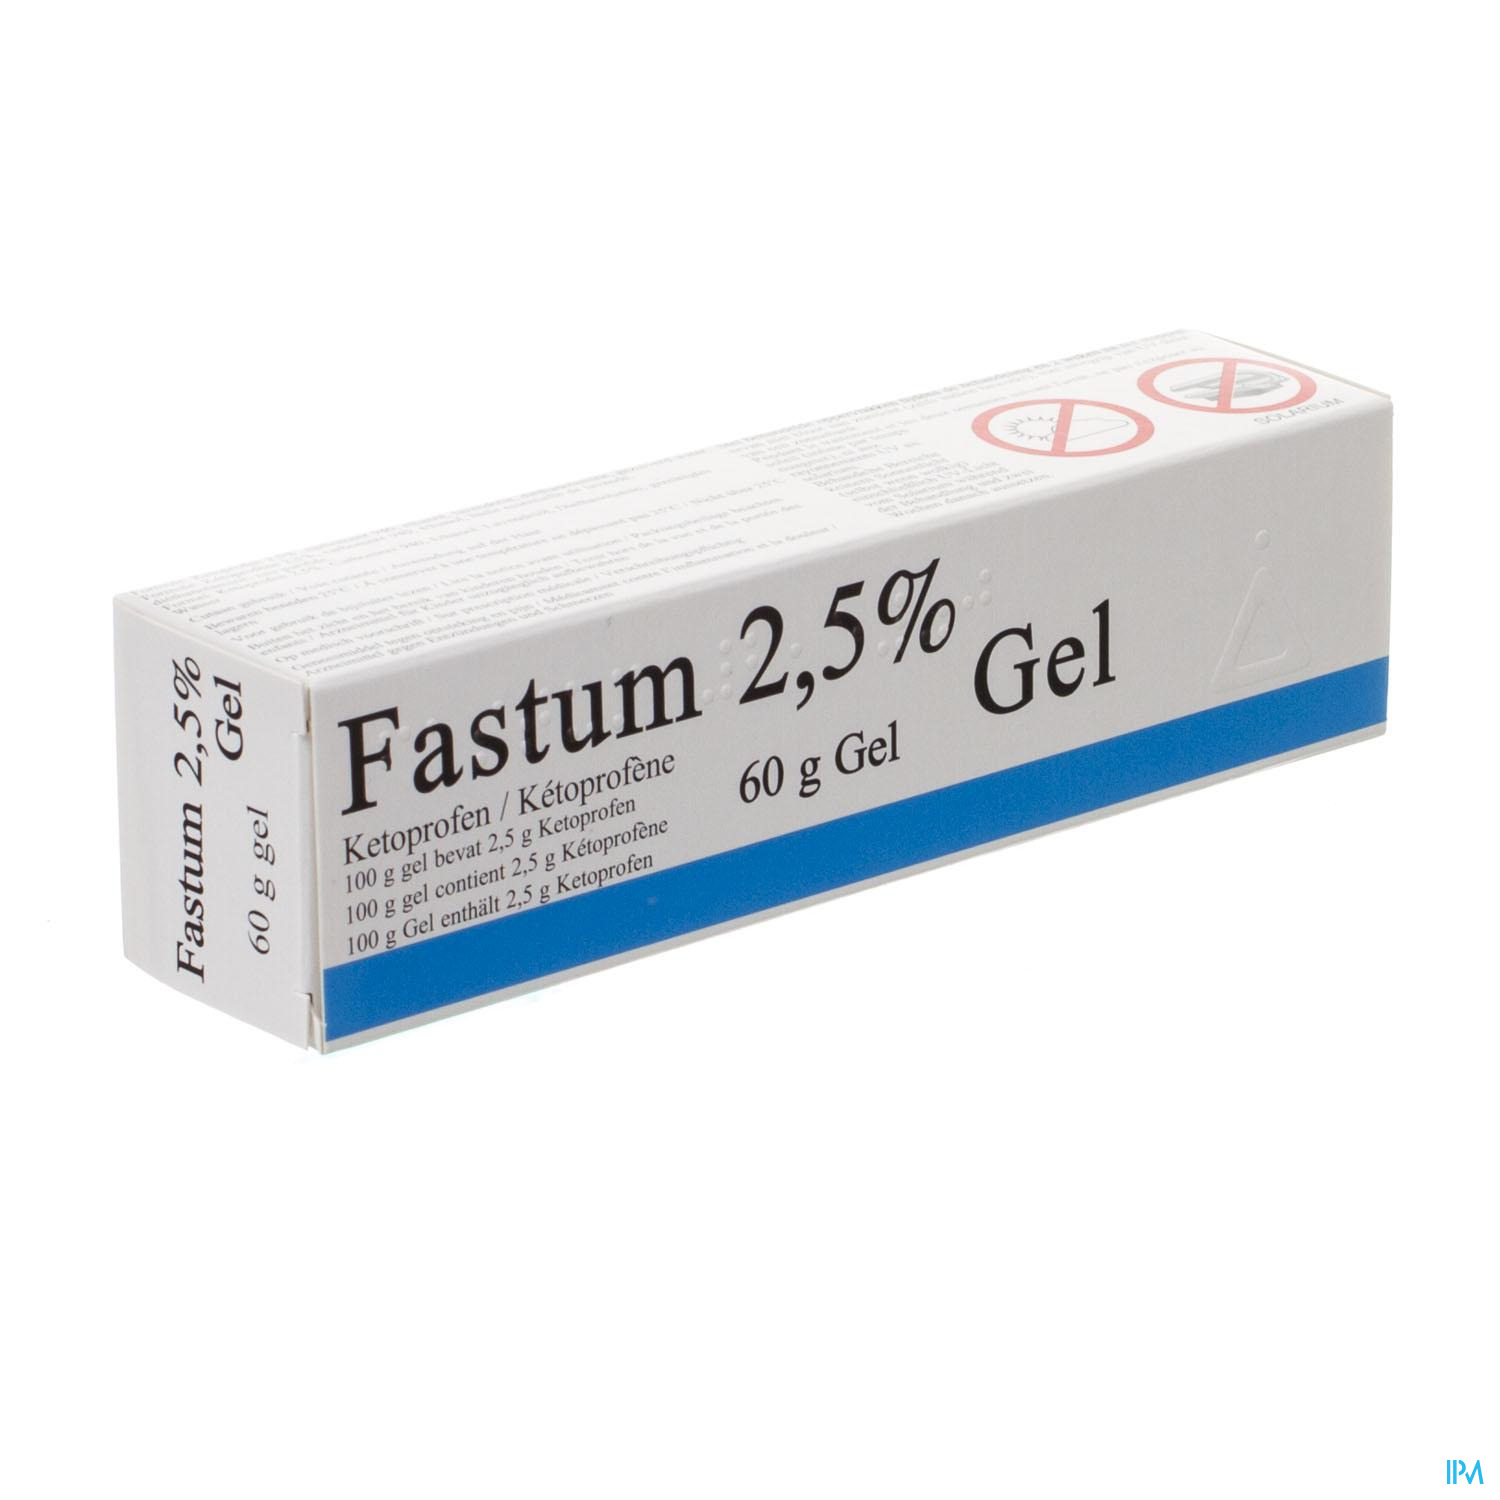 Fastum Gel 2,5% Impexeco Tube 60g Pip